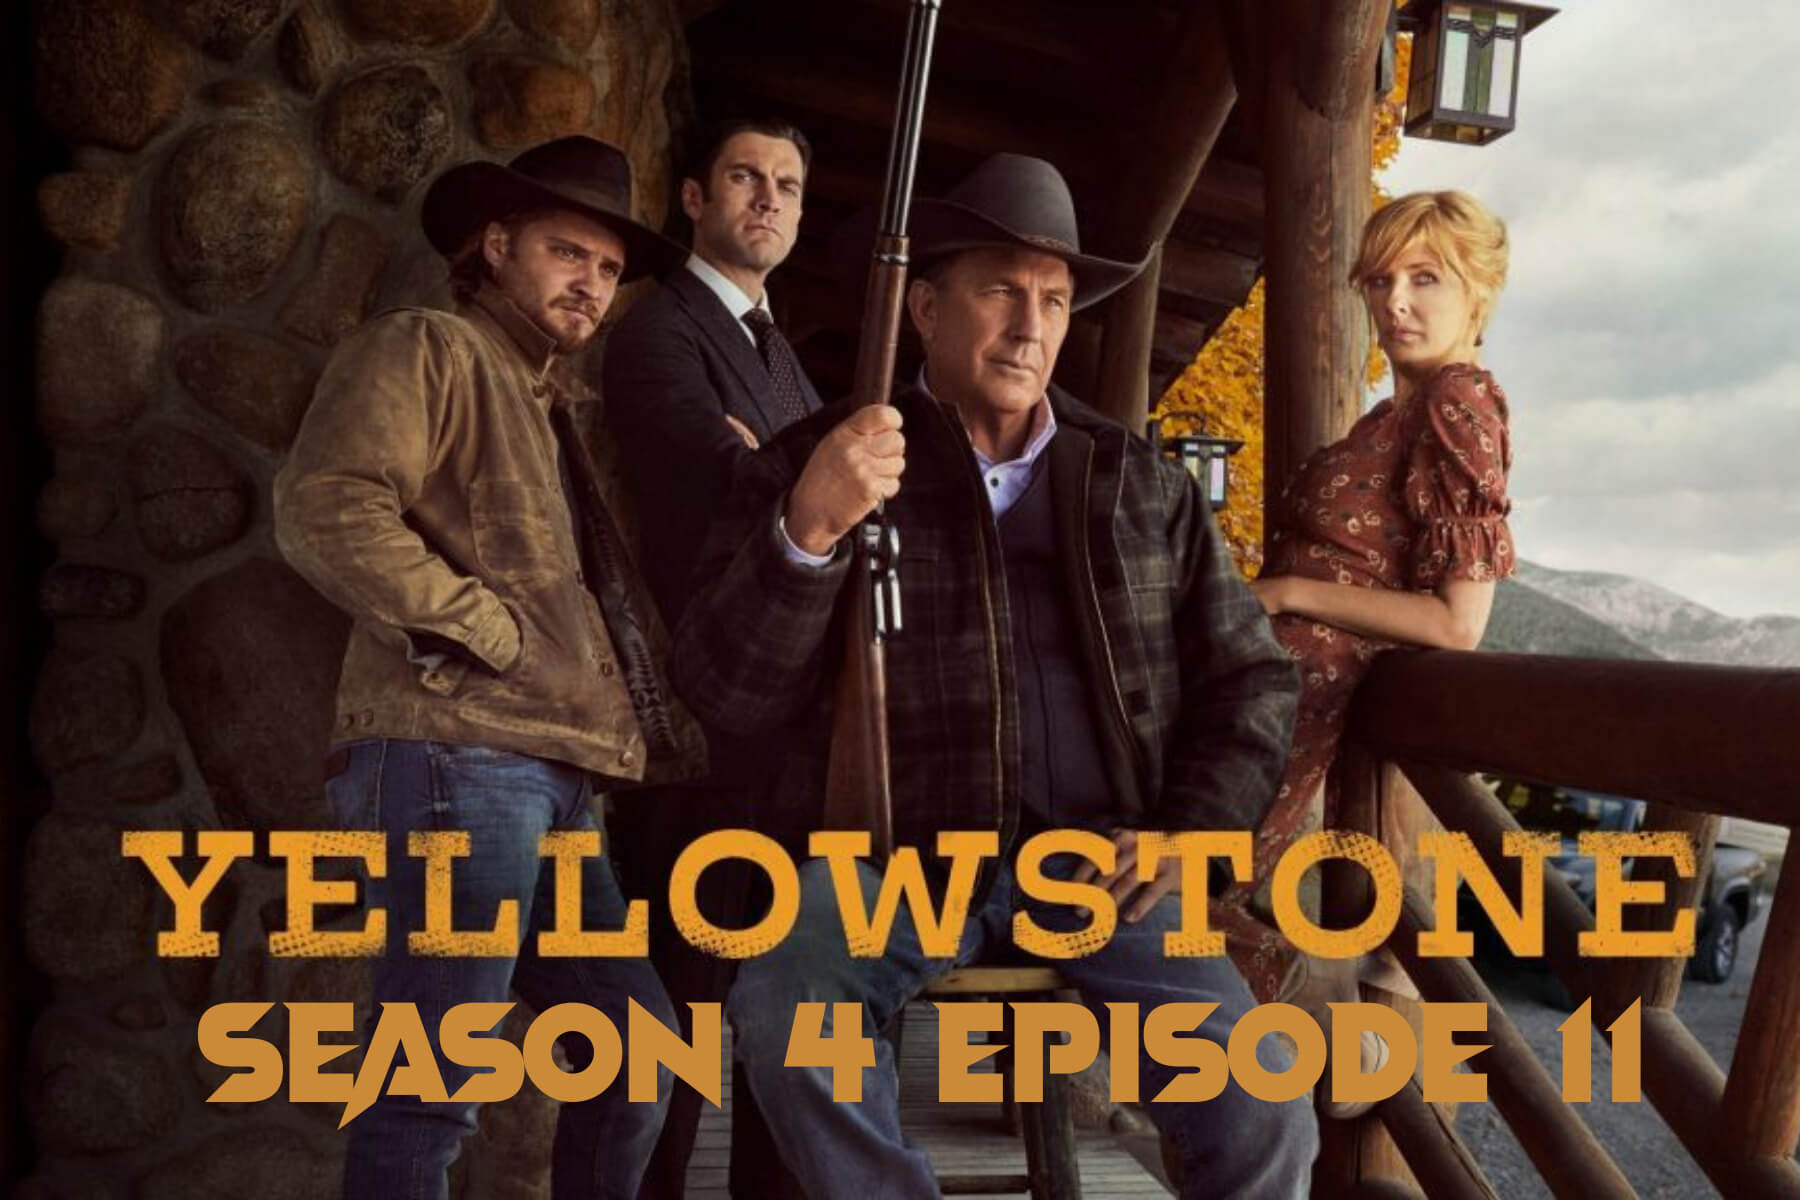 Is Yellowstone Season 4 Episode 11 is coming?